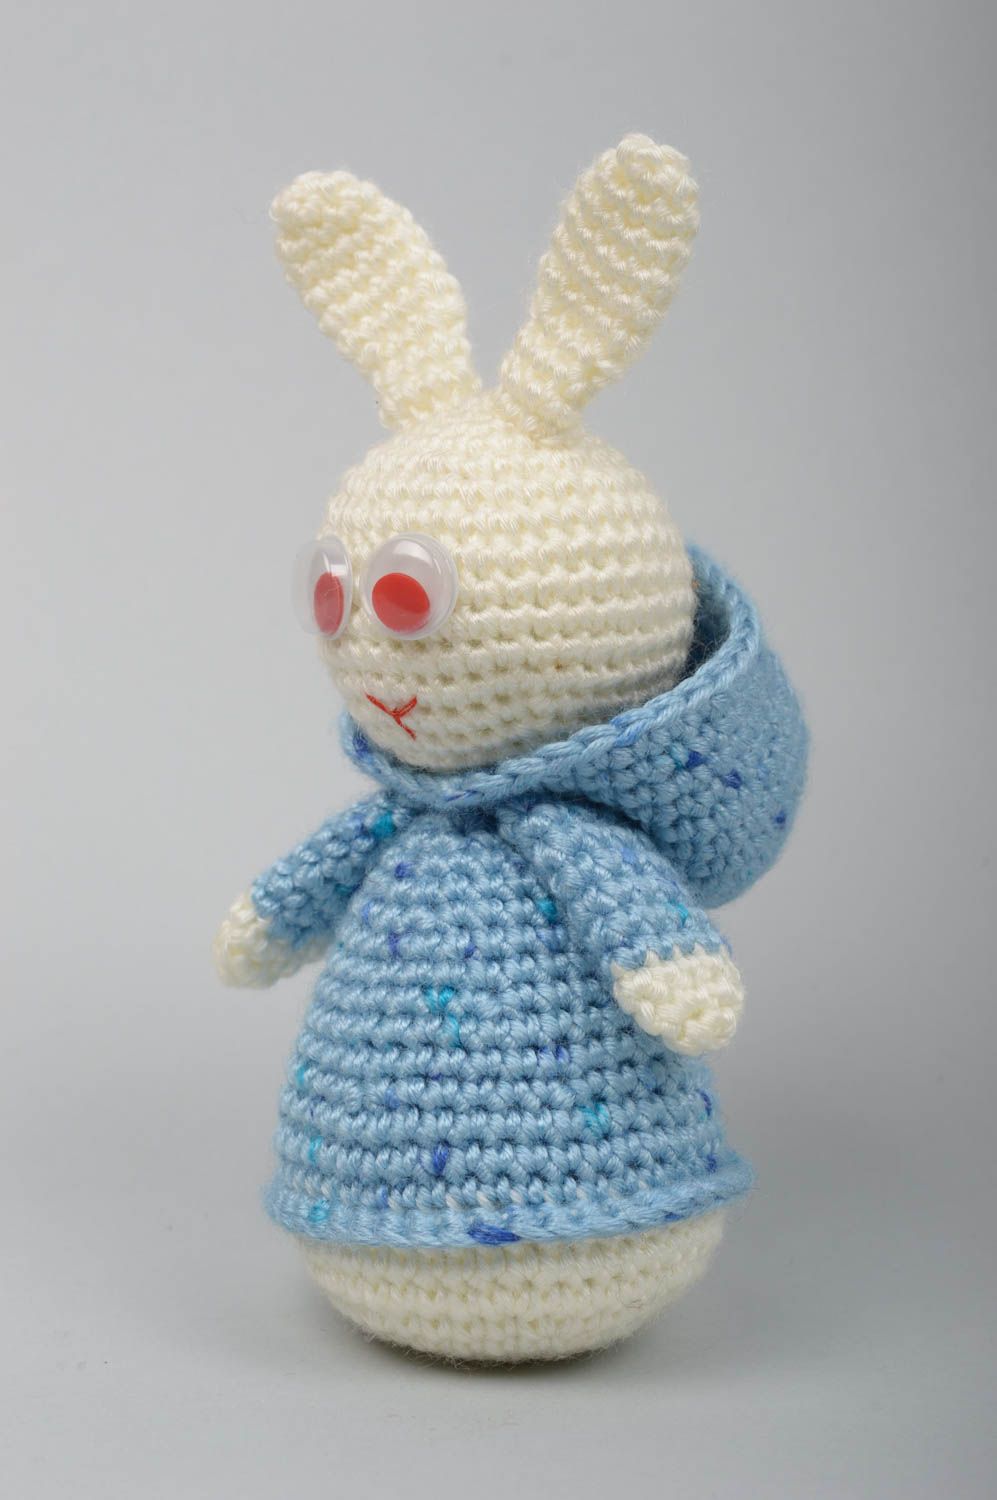 Beautiful handmade crochet toy stuffed toy hare interior decorating gift ideas photo 2